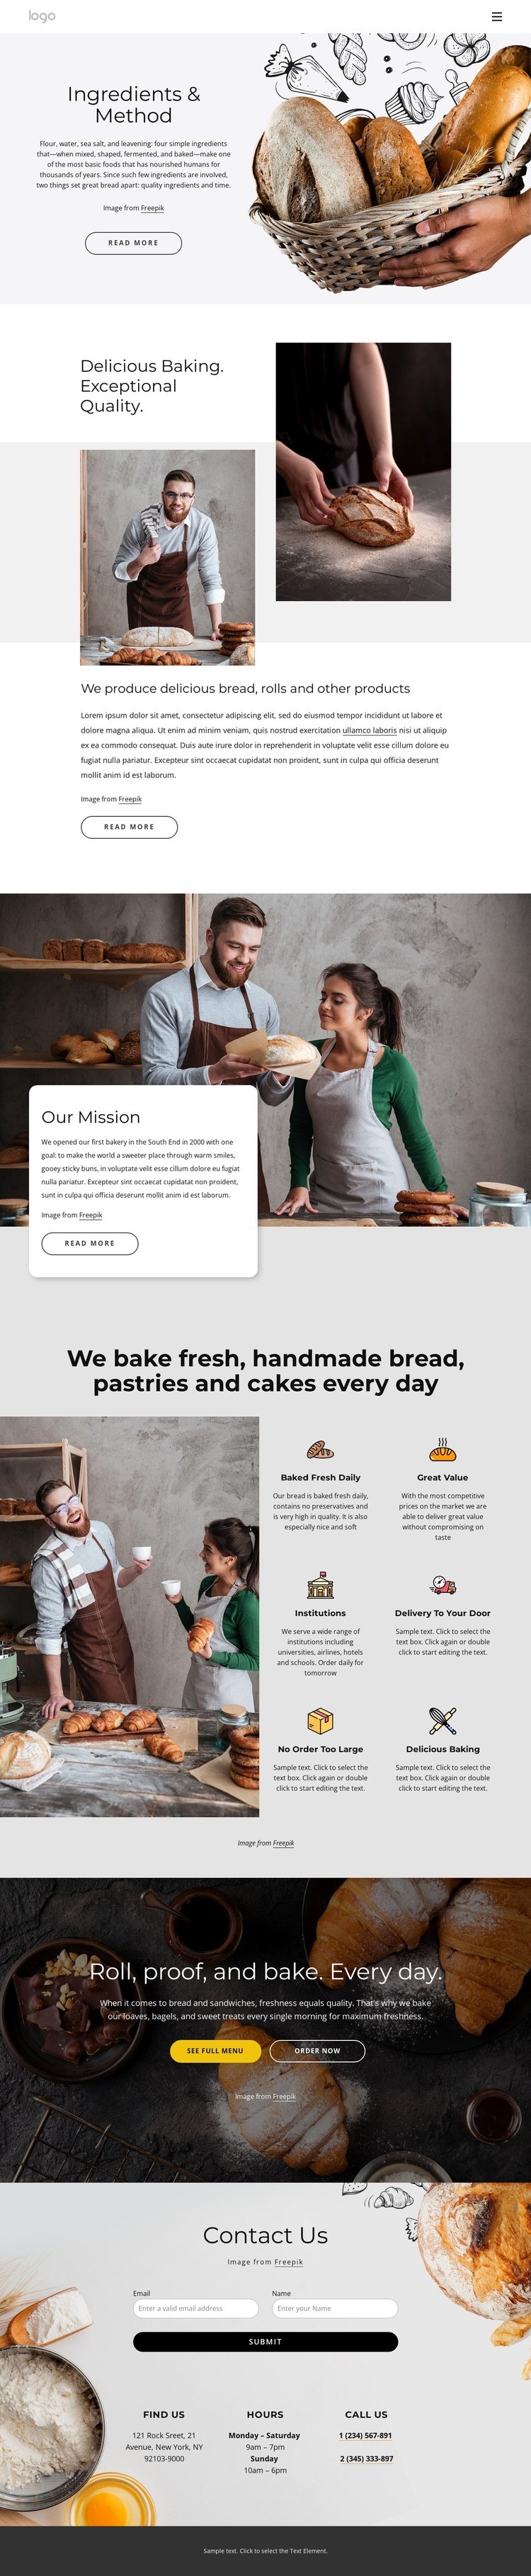 We bake handmade bread Wix Template Alternative